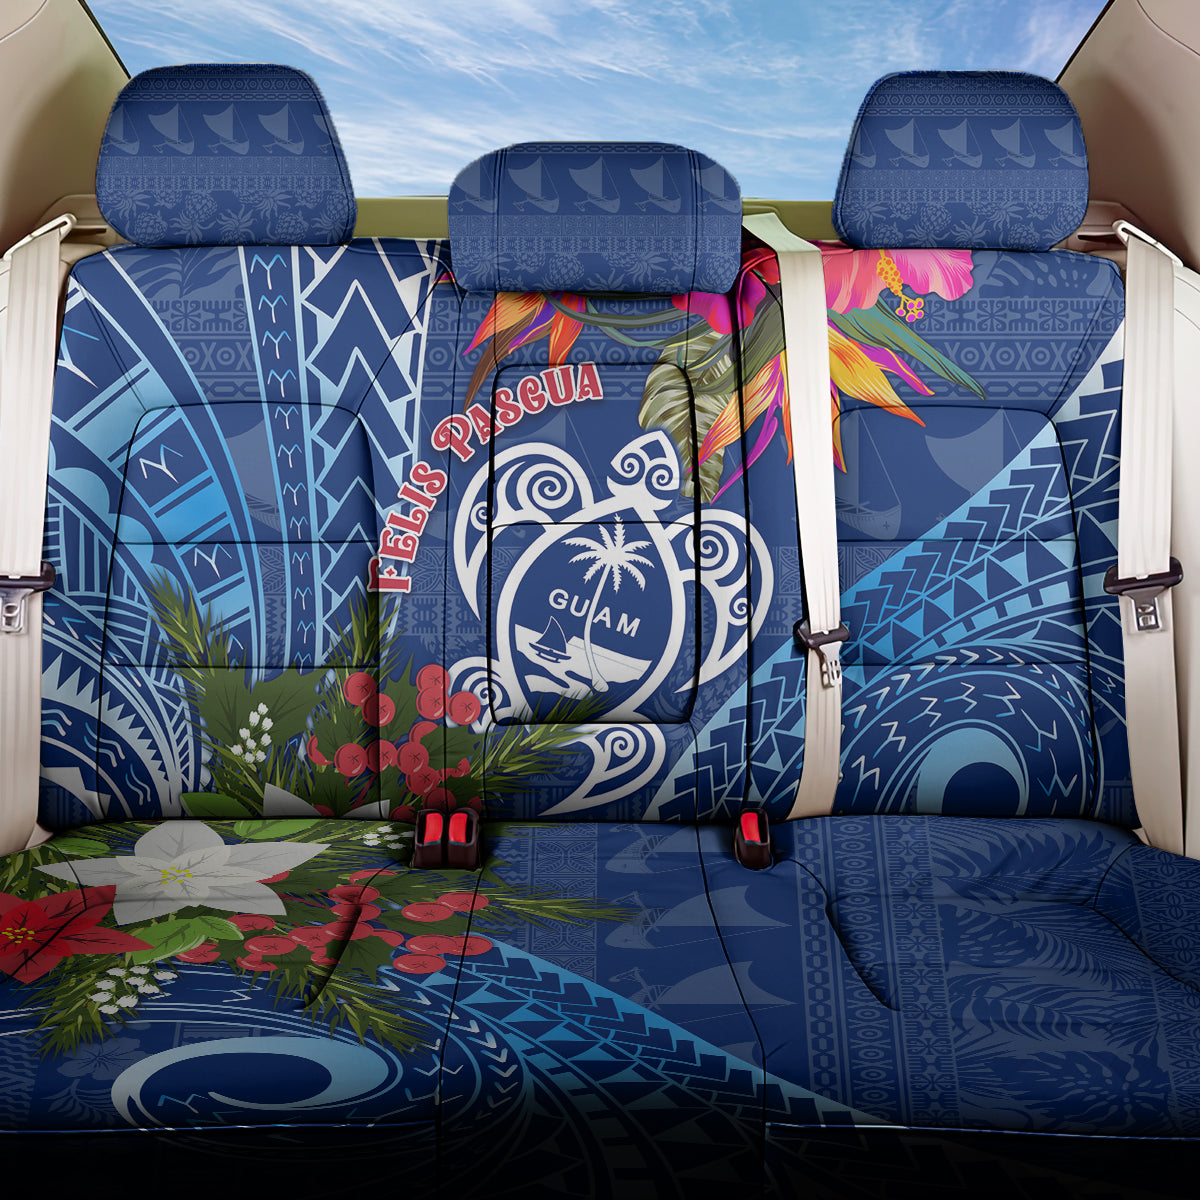 Guam Christmas Back Car Seat Cover Turtle Mix Tapa Felis Pasgua LT7 One Size Blue - Polynesian Pride